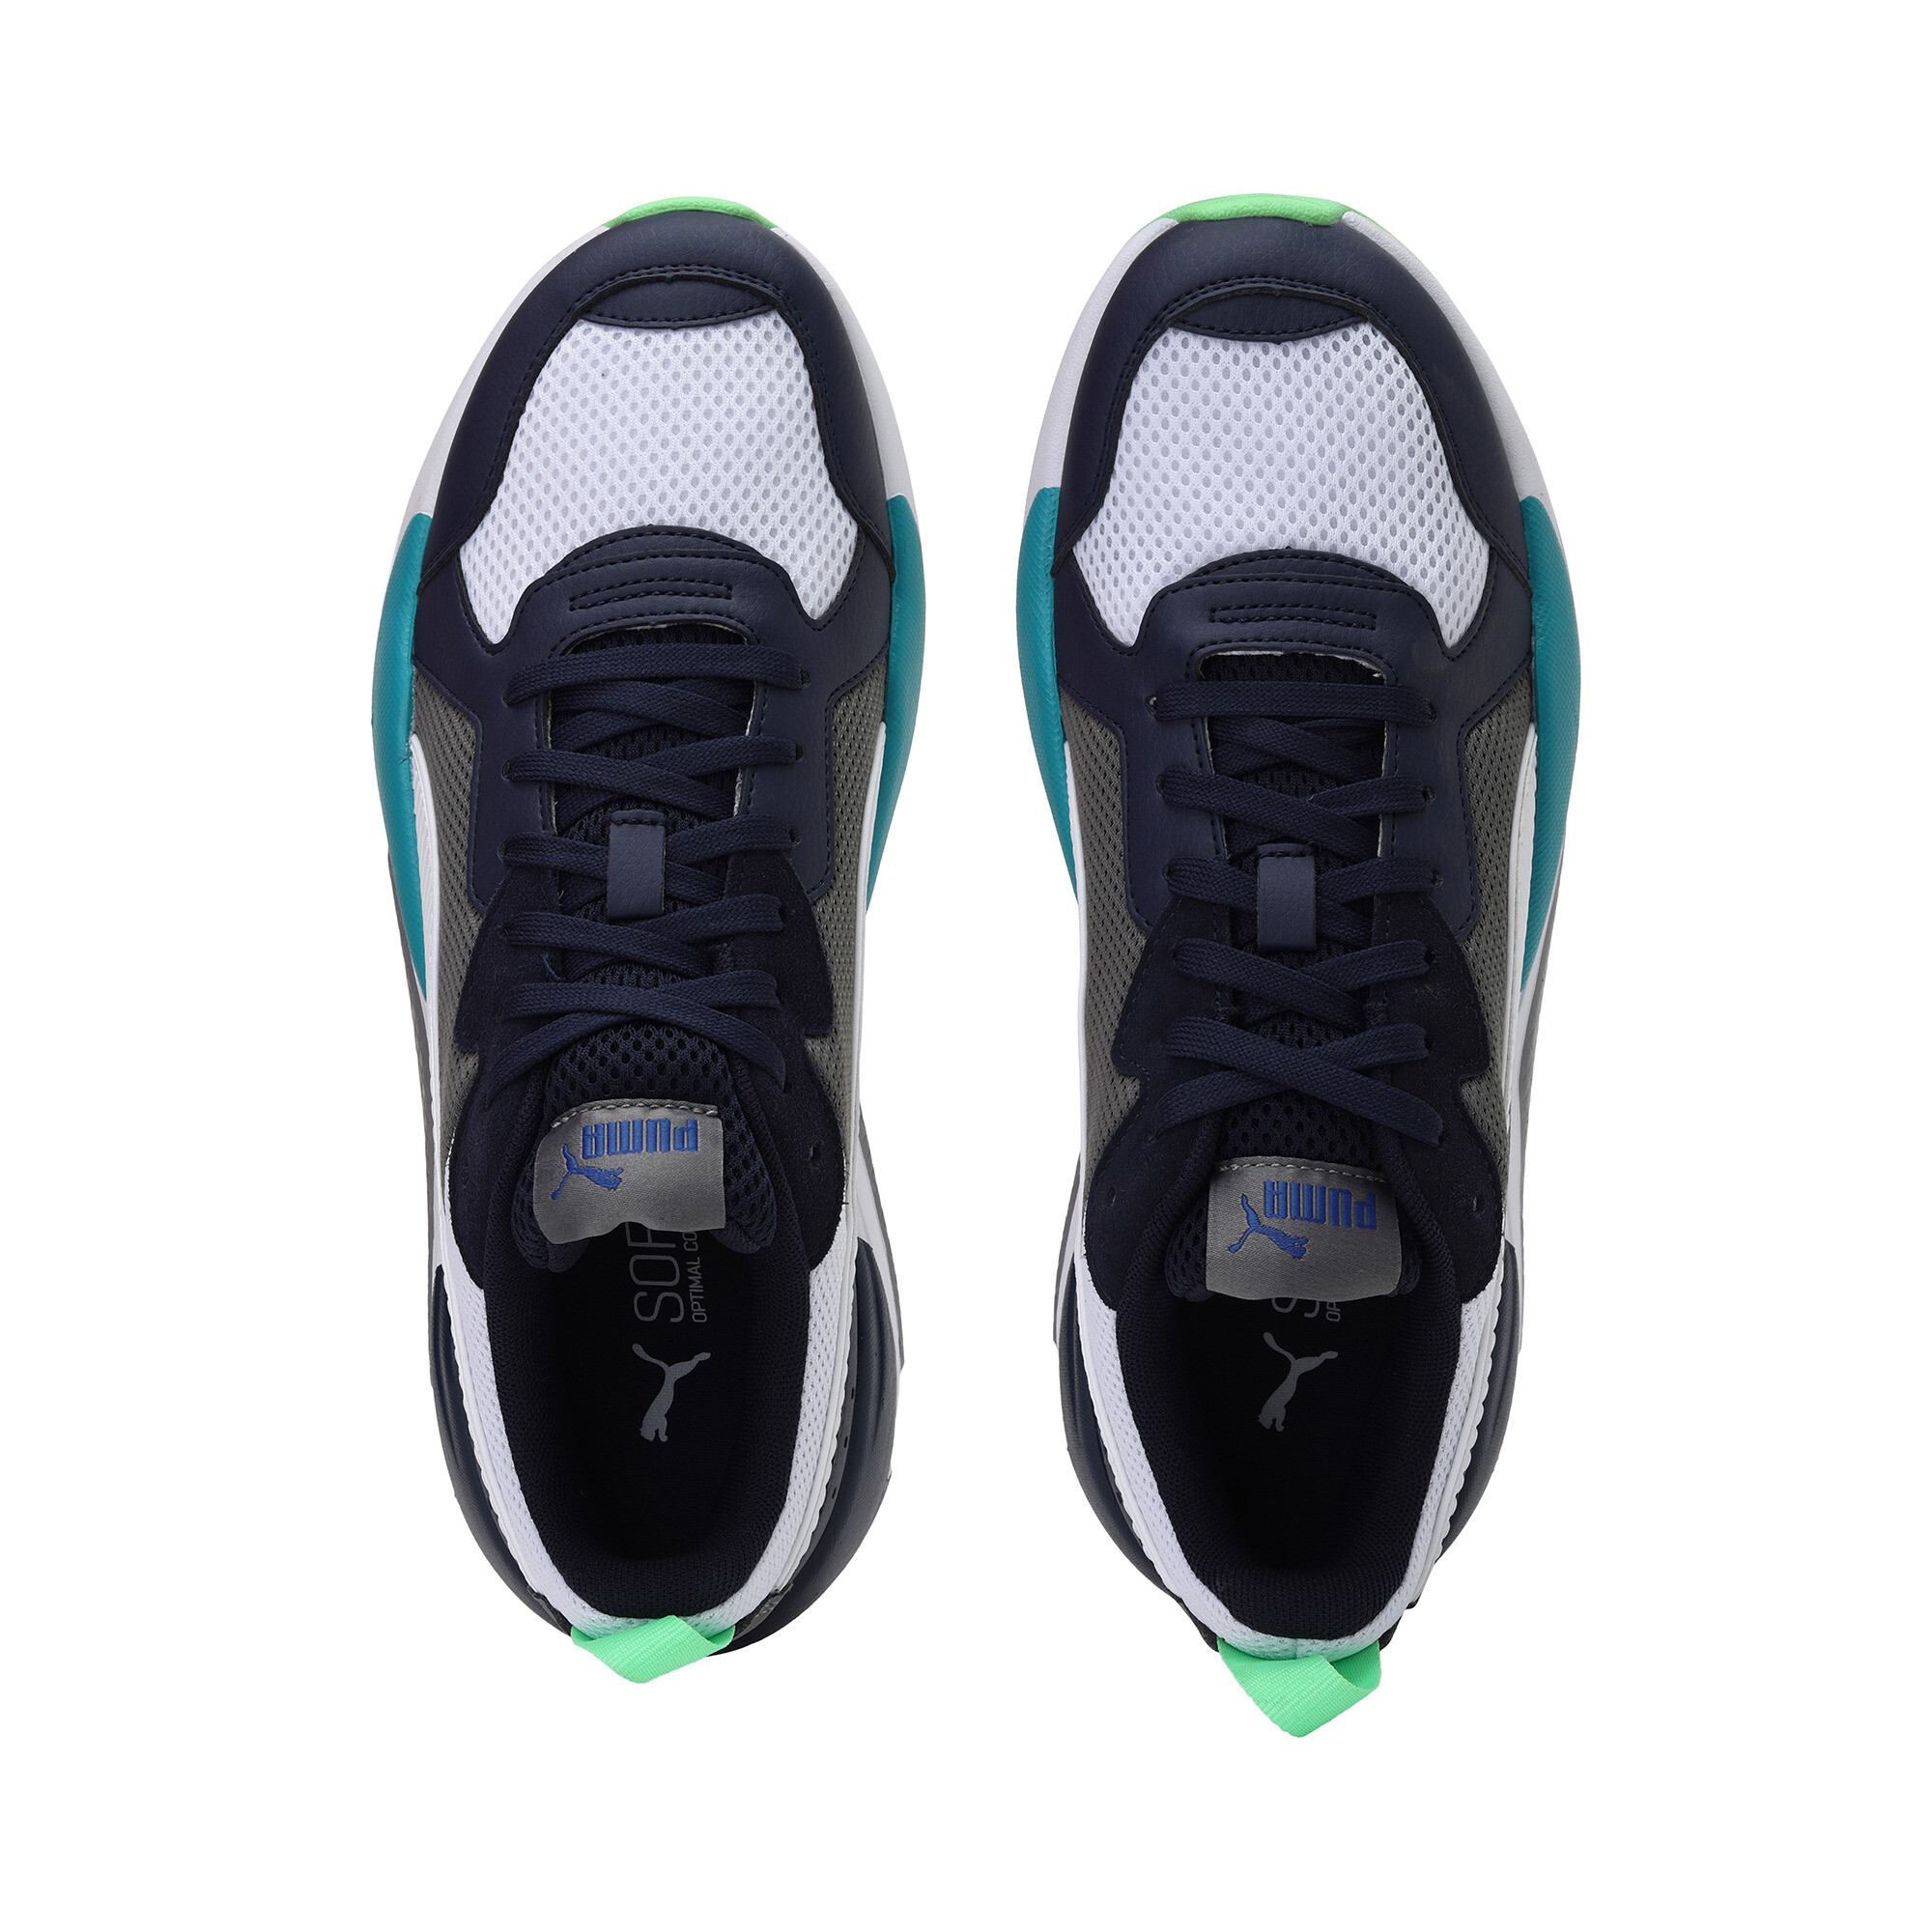 PUMA Men's X-RAY Sneakers | eBay